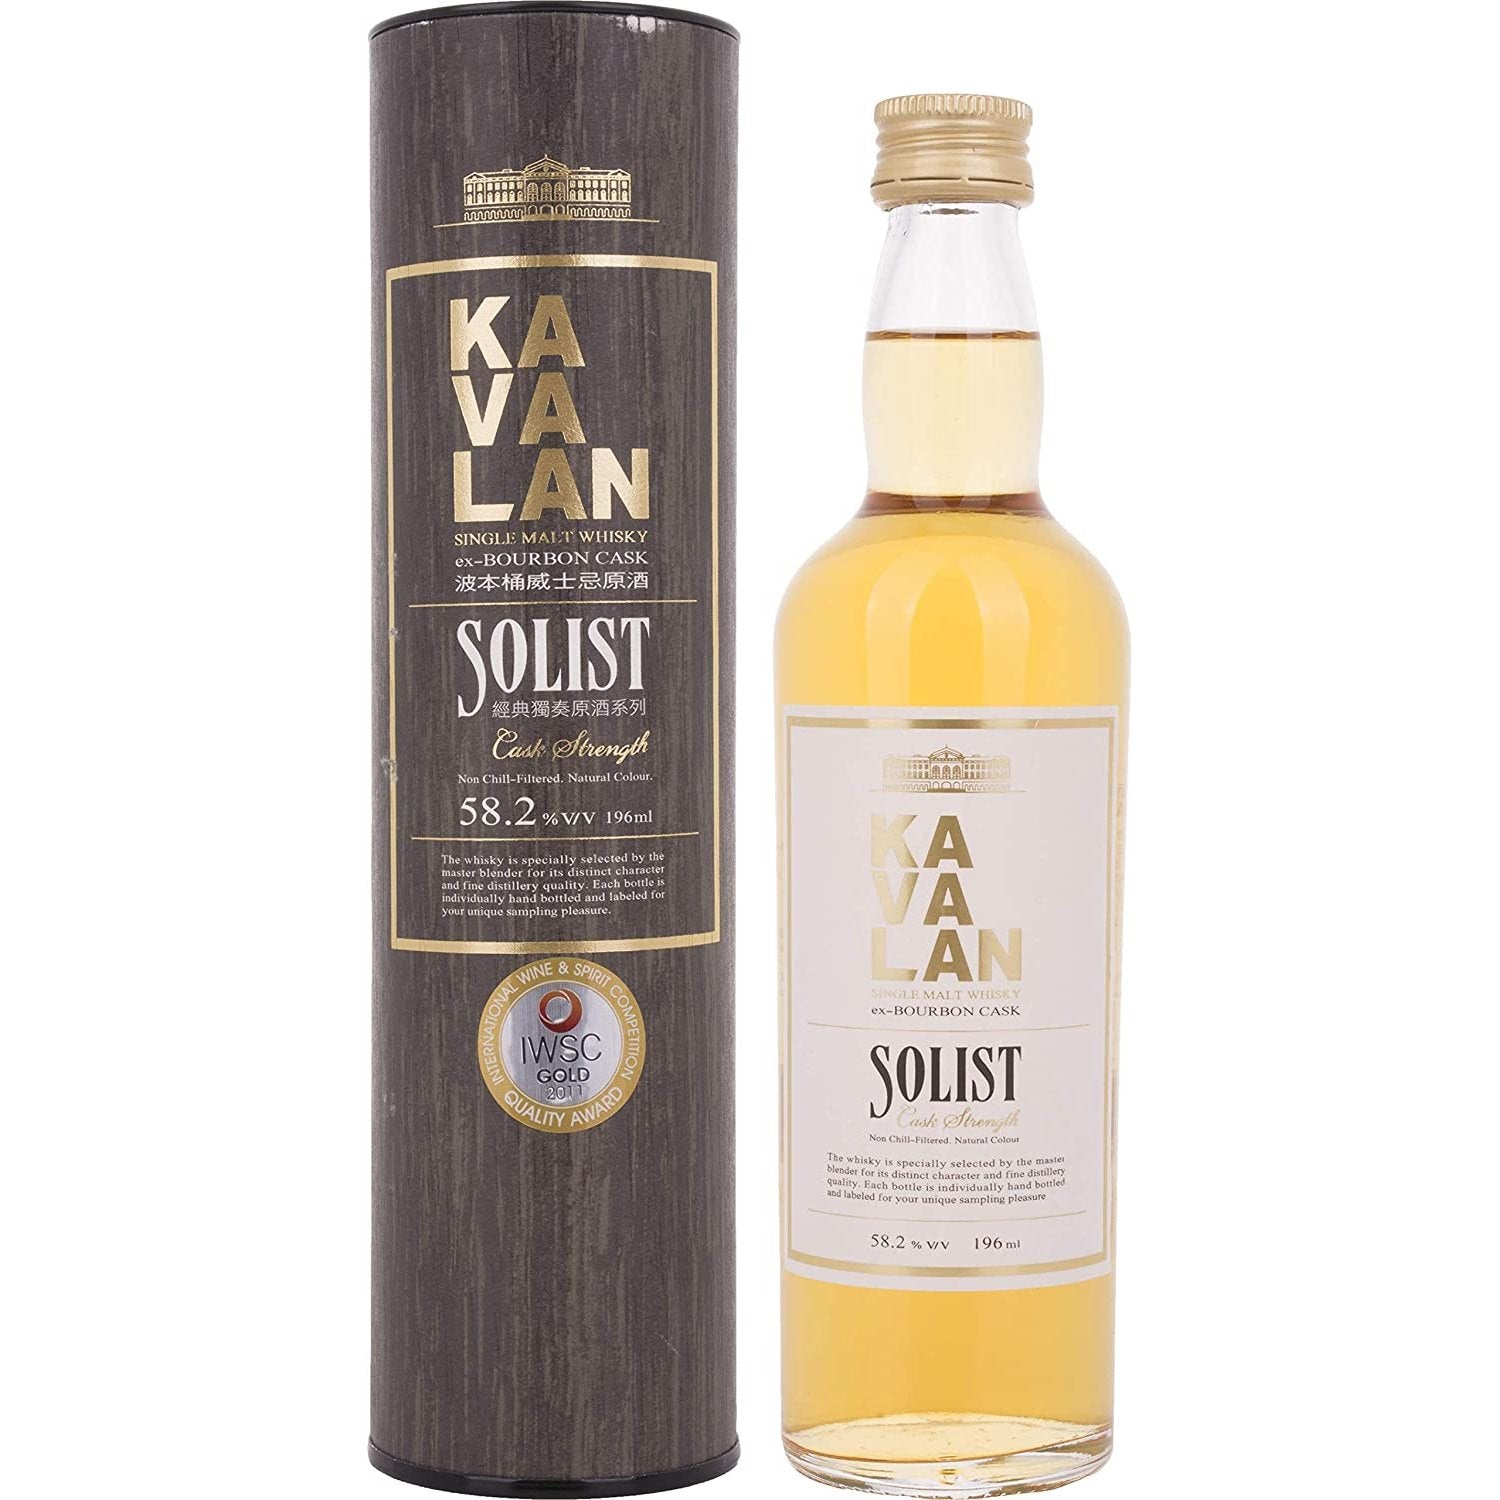 Kavalan SOLIST Single Malt Whisky ex-BOURBON CASK 58,2% Vol. 0,196l in Giftbox